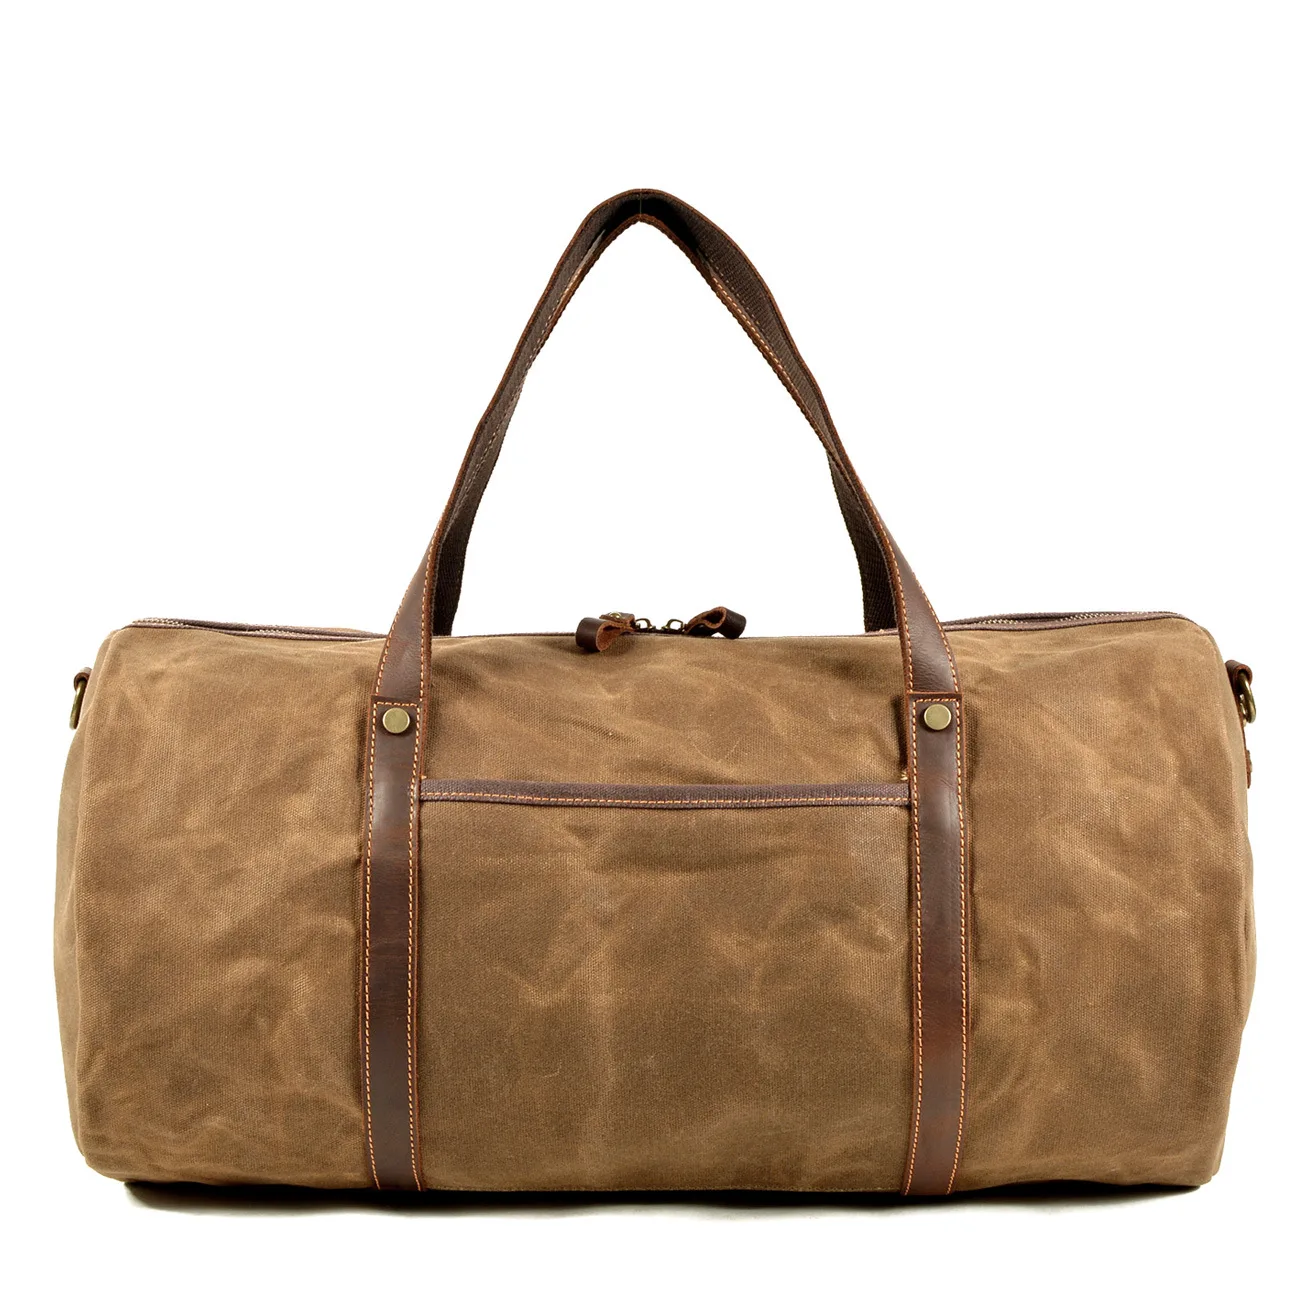 Retro men's travel bag canvas belt leather large-capacity luggage bag portable waterproof business travel bag duffel bag